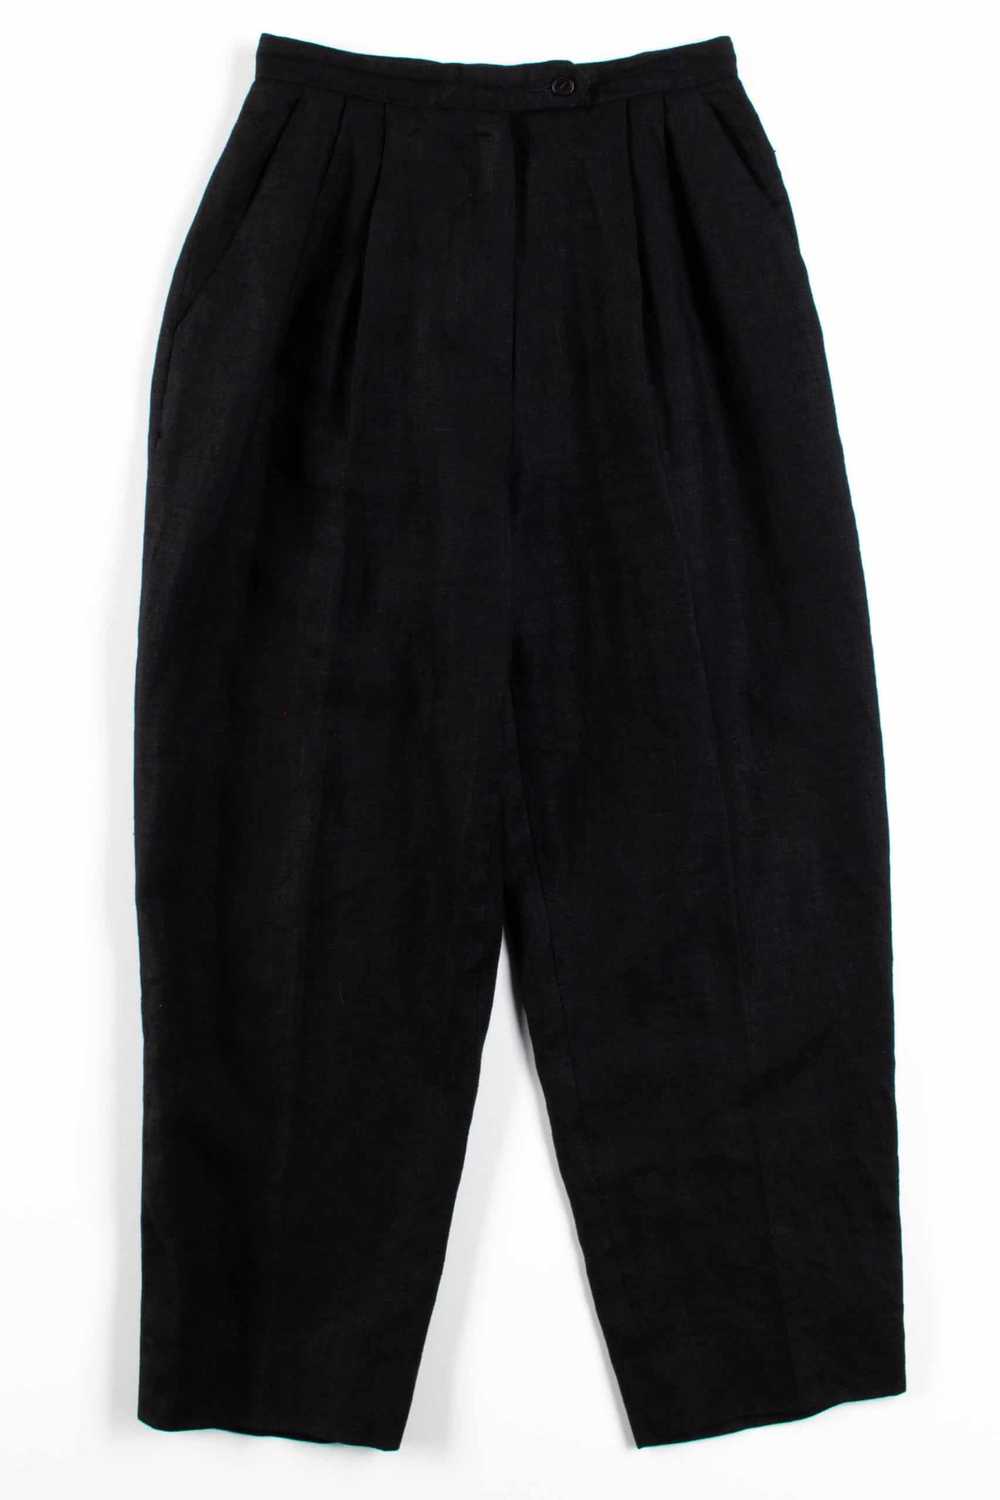 Black Linen Pleated Pants (sz. 10) - image 2